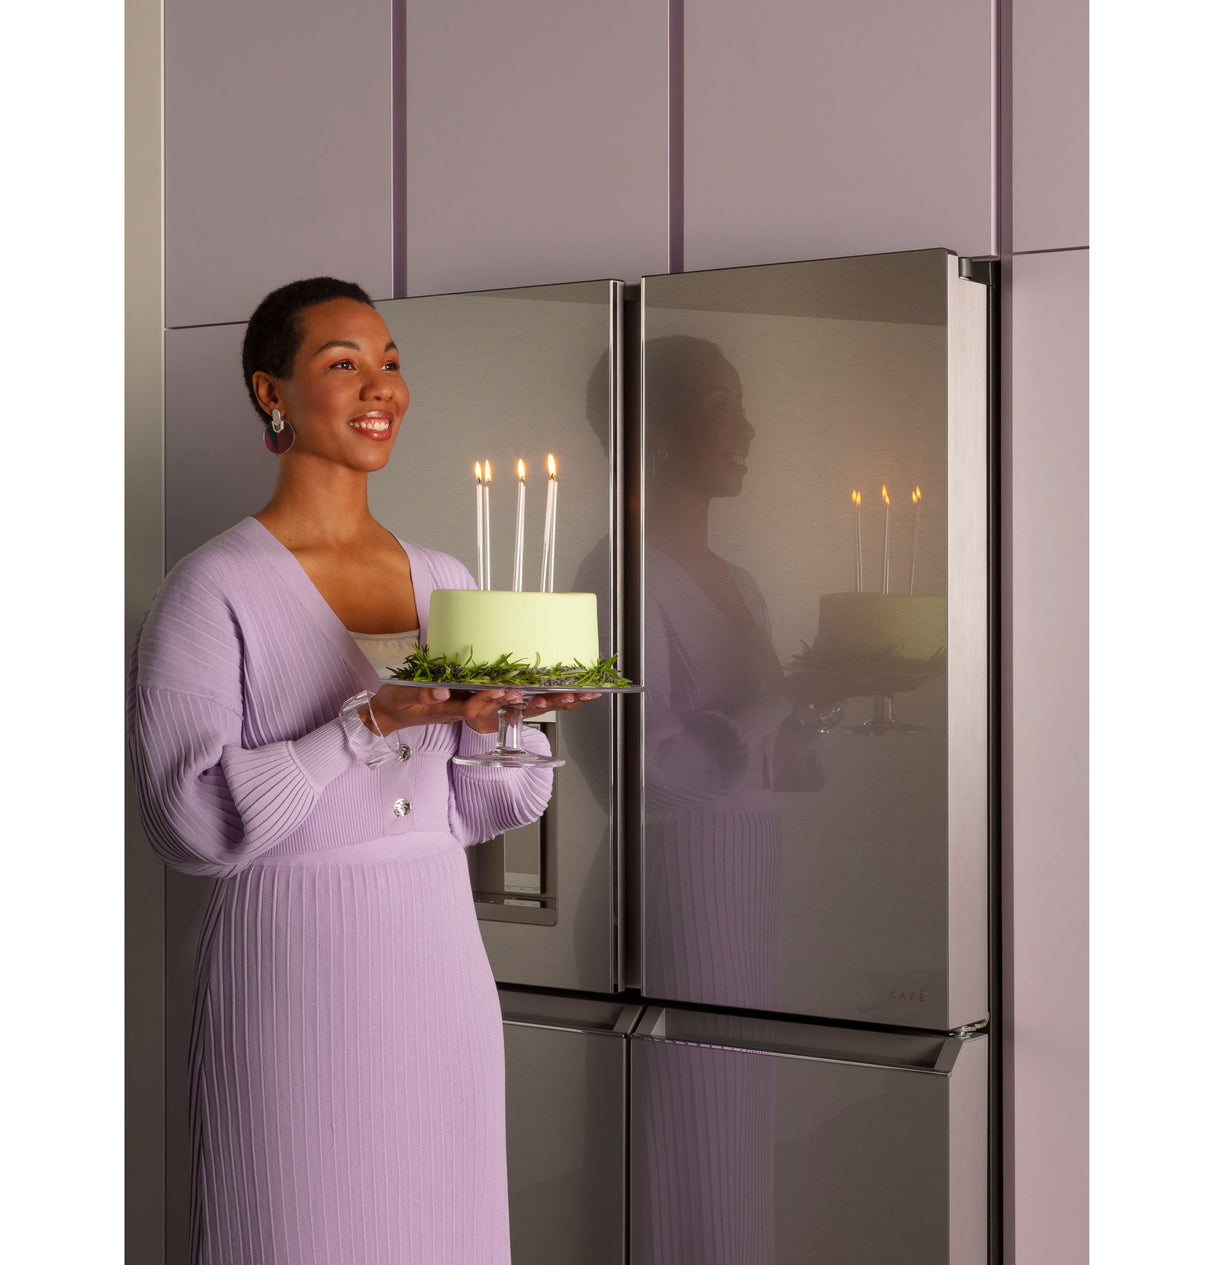 Caf(eback)(TM) ENERGY STAR(R) 27.4 Cu. Ft. Smart Quad-Door Refrigerator in Platinum Glass - (CQE28DM5NS5)